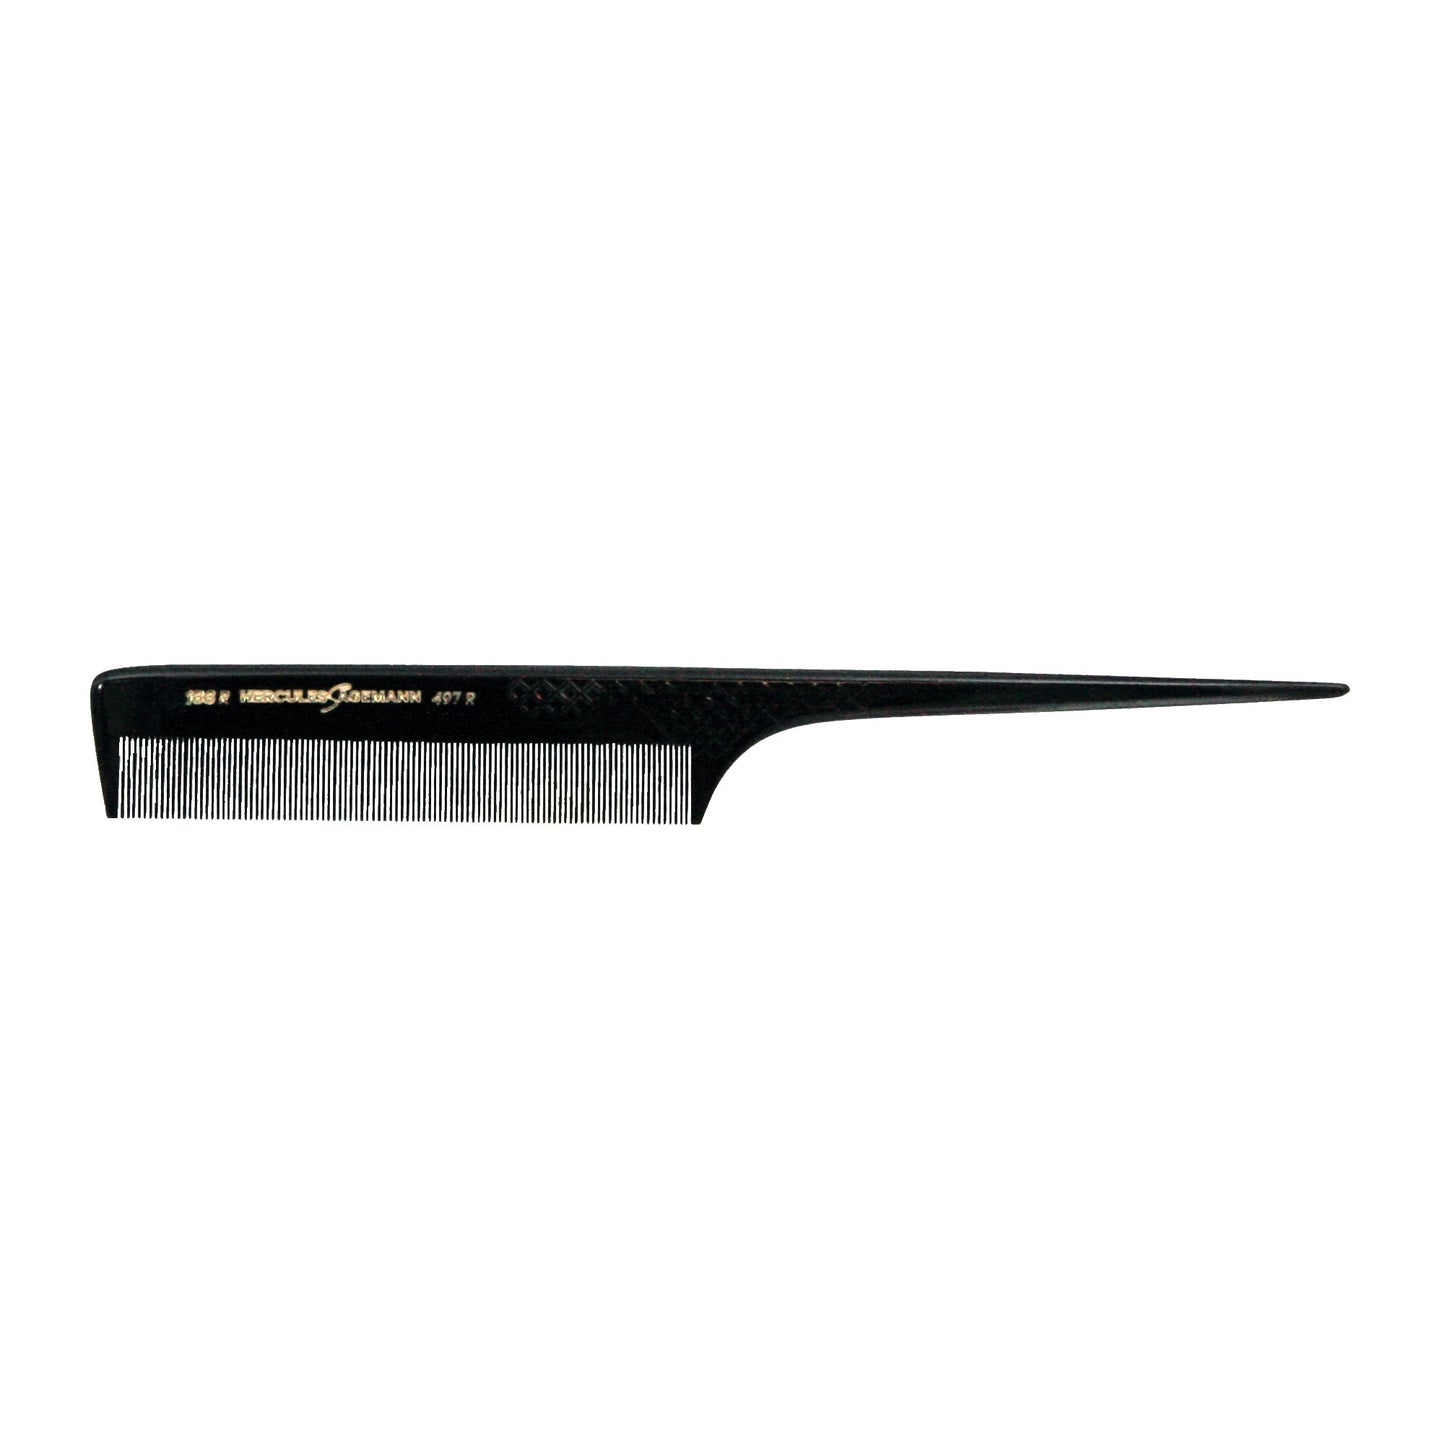 Hard Rubber, 8in Rat Tail Fine Tooth Comb, Hercules Sagemann 188R-497R